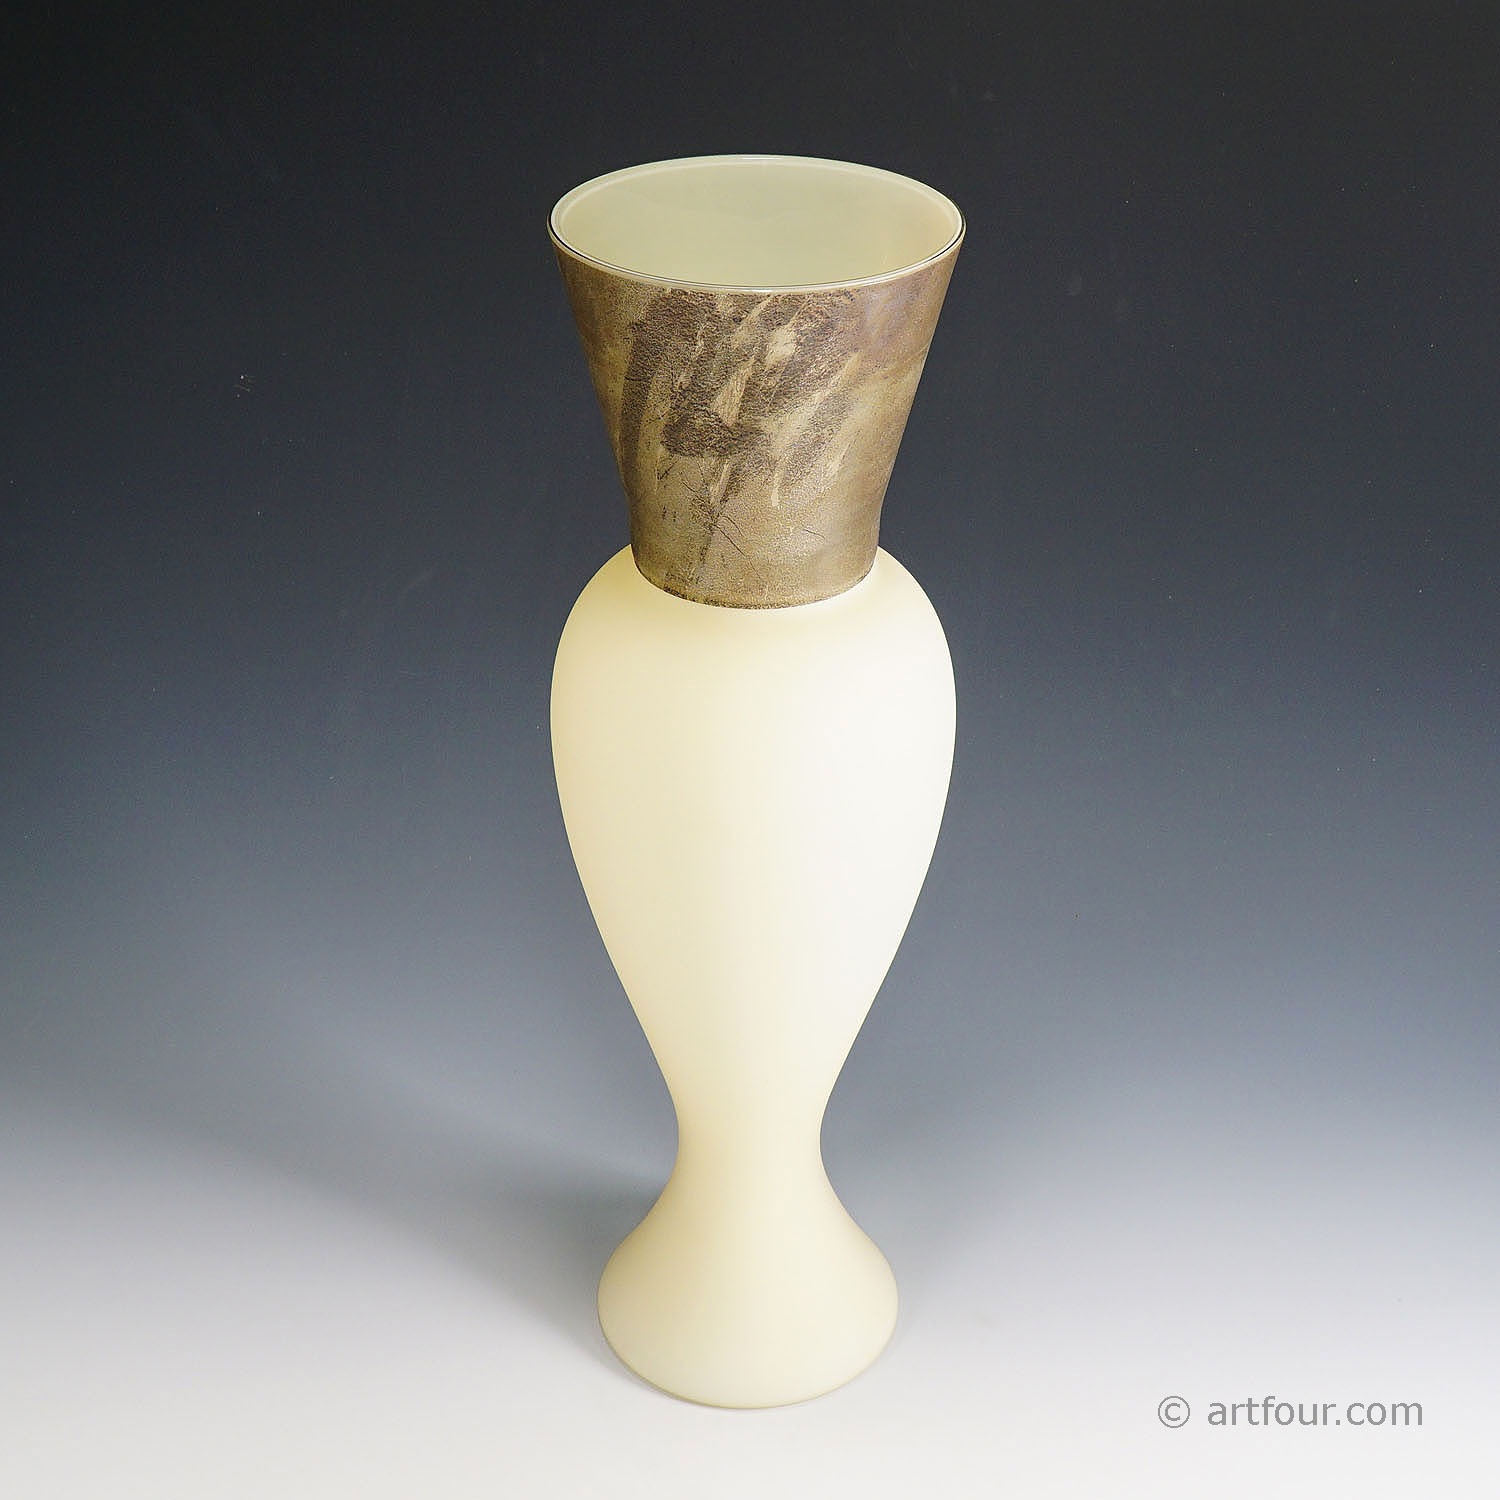 Vase 'Regina' designed by Rodolfo Dordoni for Venini, Murano